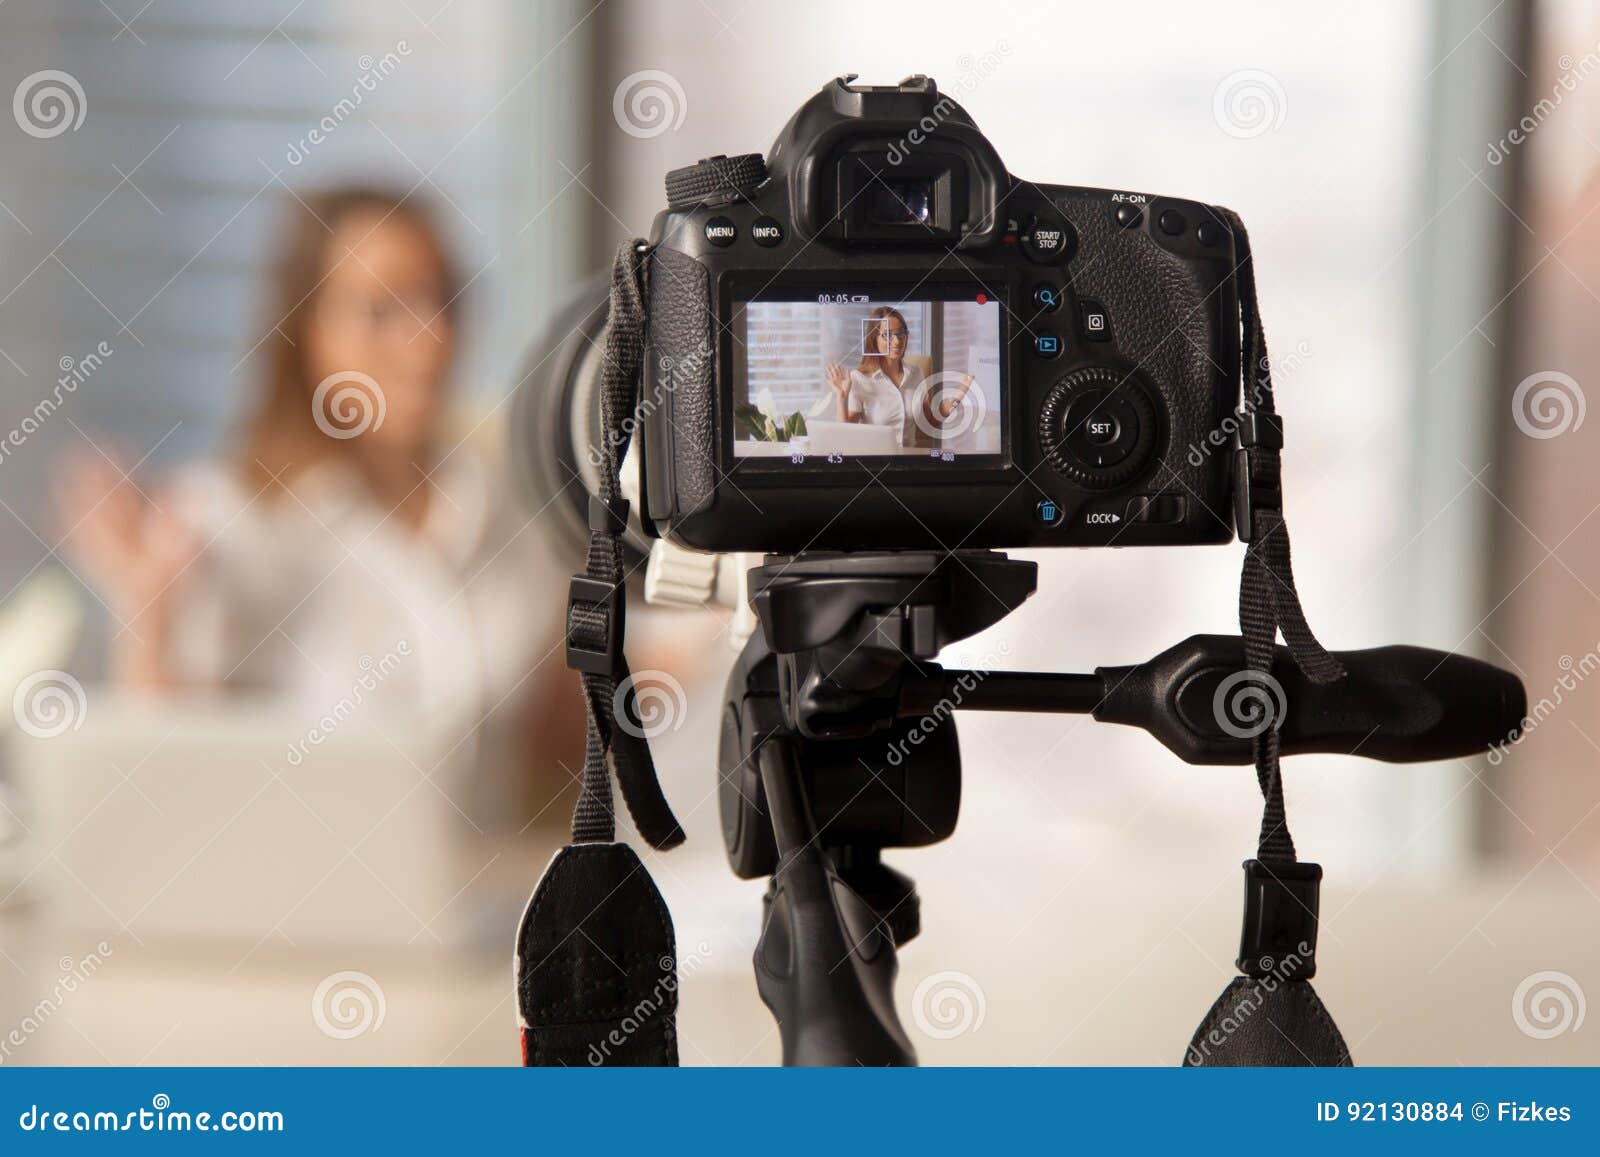 recording business video on modern dslr camera